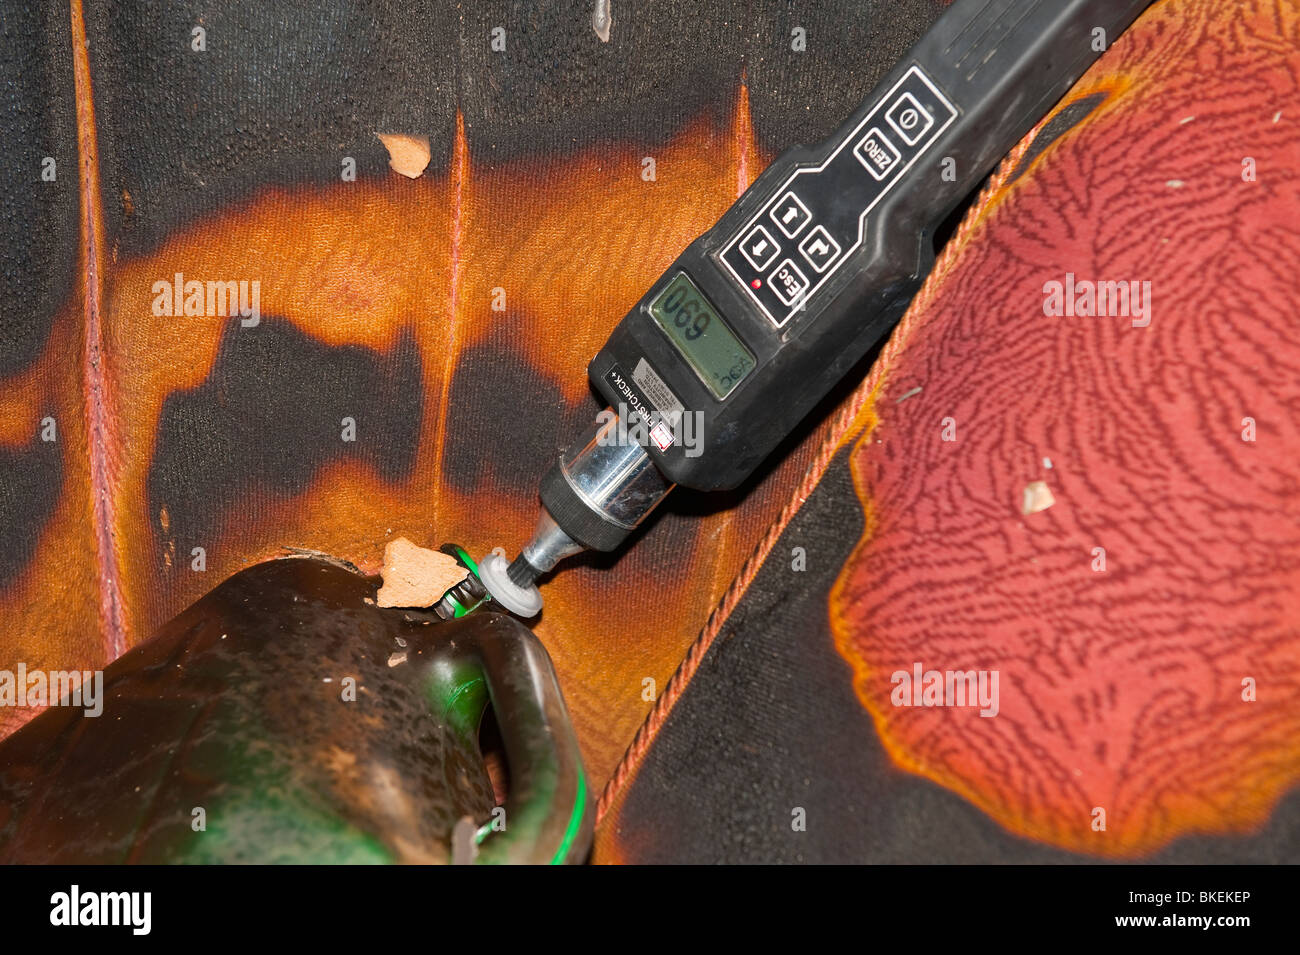 Accelerant detector measuring Volatile Organic Compunds at scene of arson fire Stock Photo